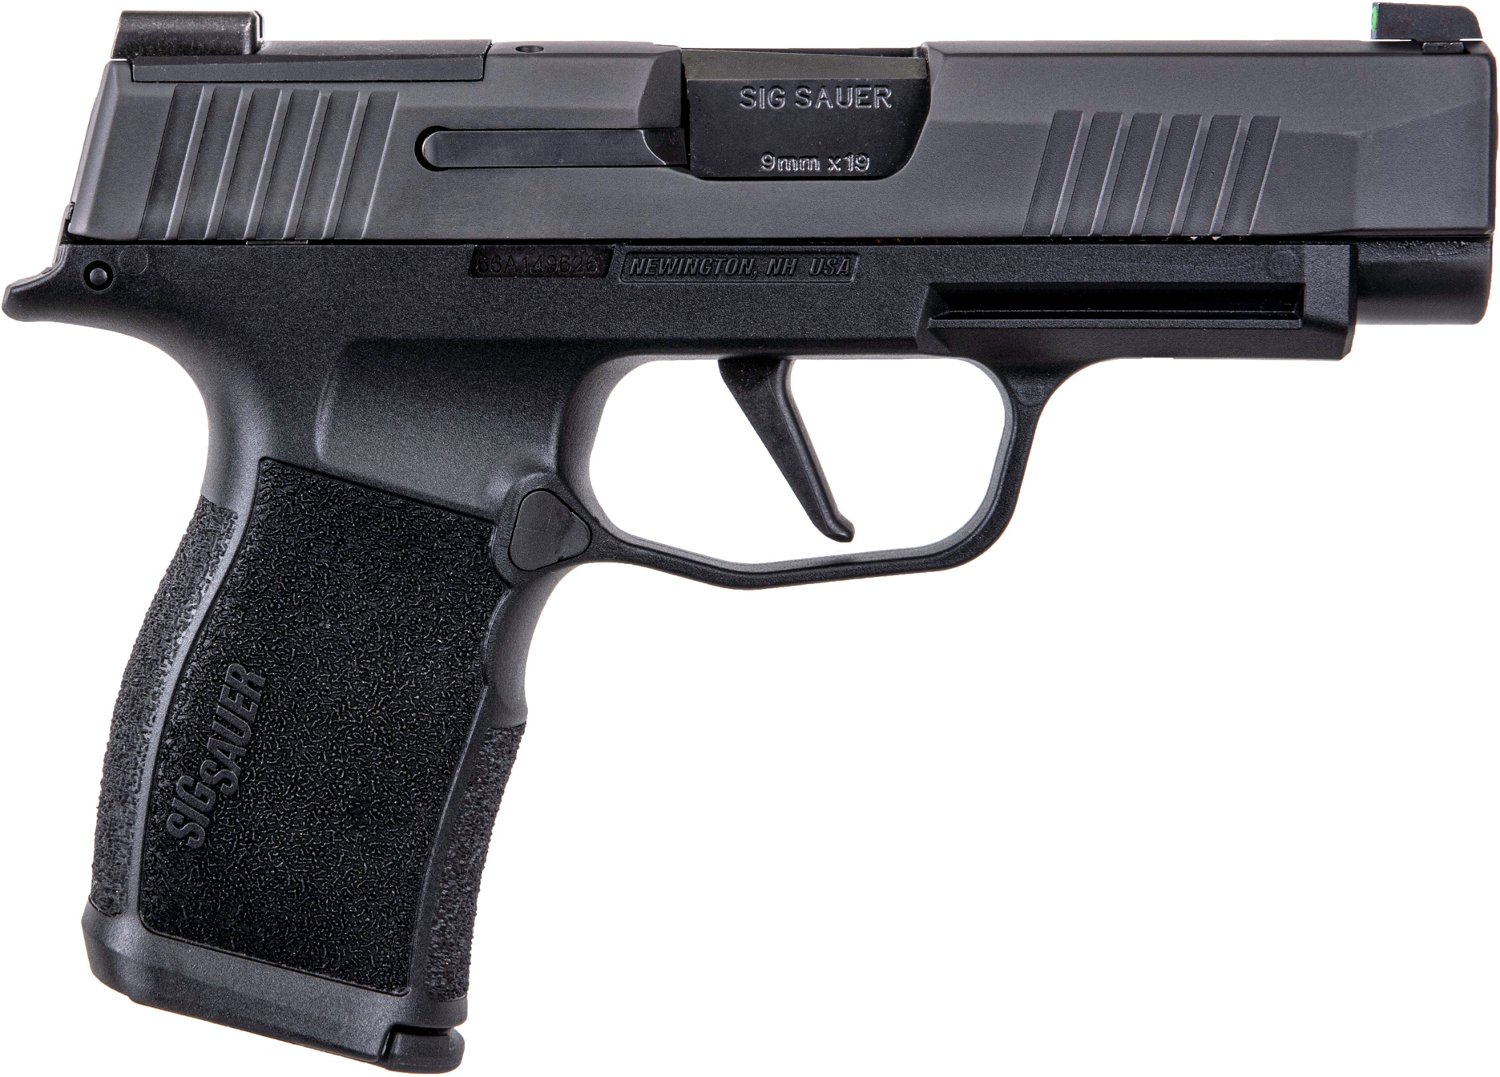 SIG SAUER P365 XL 9mm Semiautomatic Pistol | Tactical World